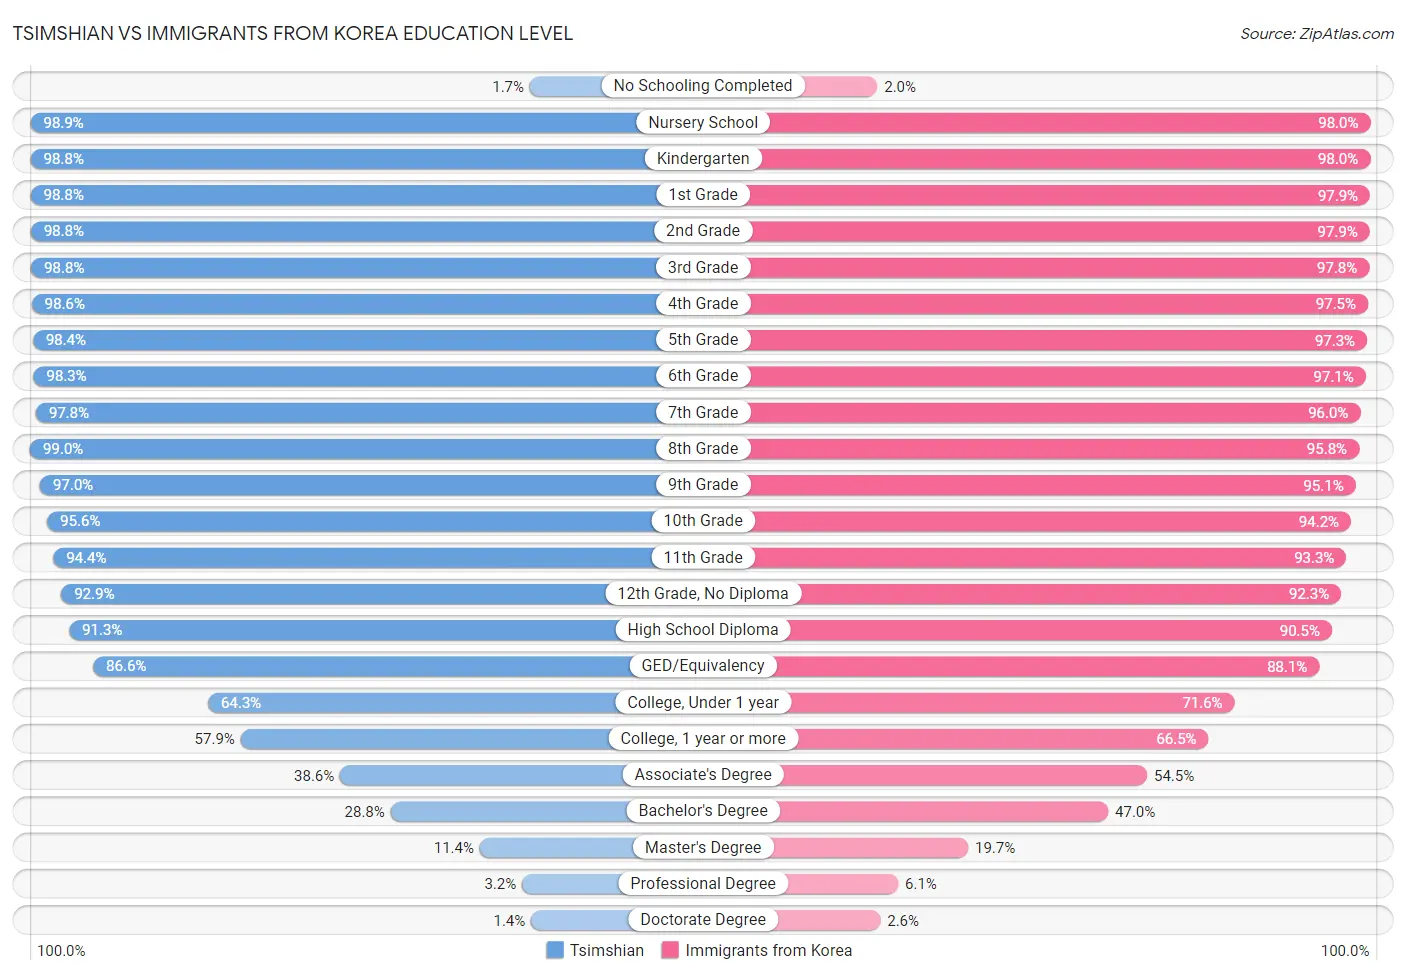 Tsimshian vs Immigrants from Korea Education Level